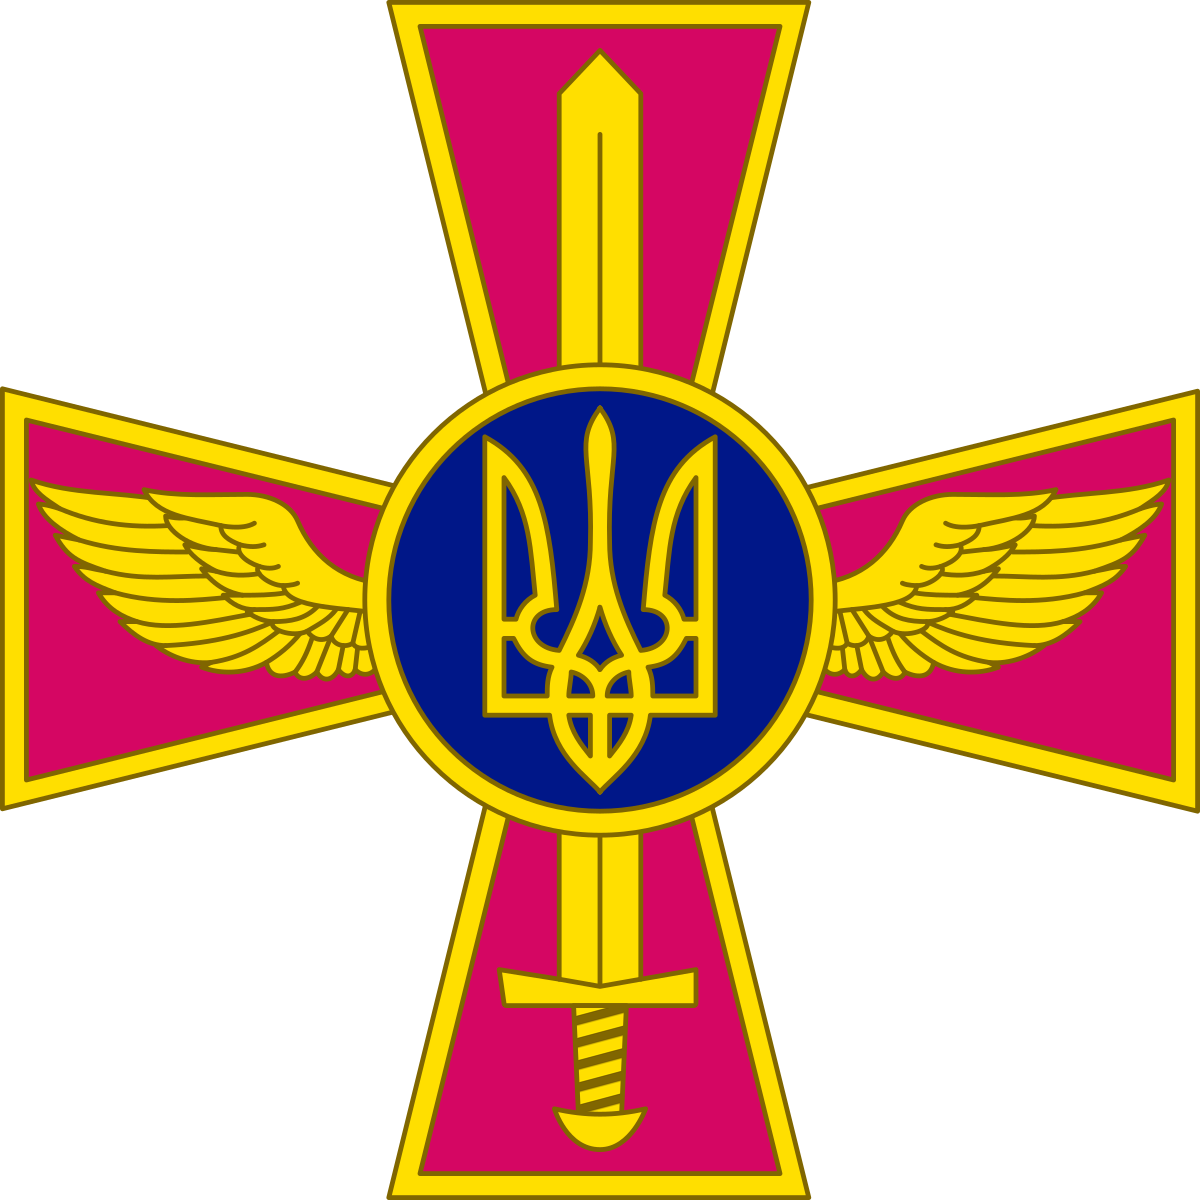 Ukrainian Air Force - Wikipedia